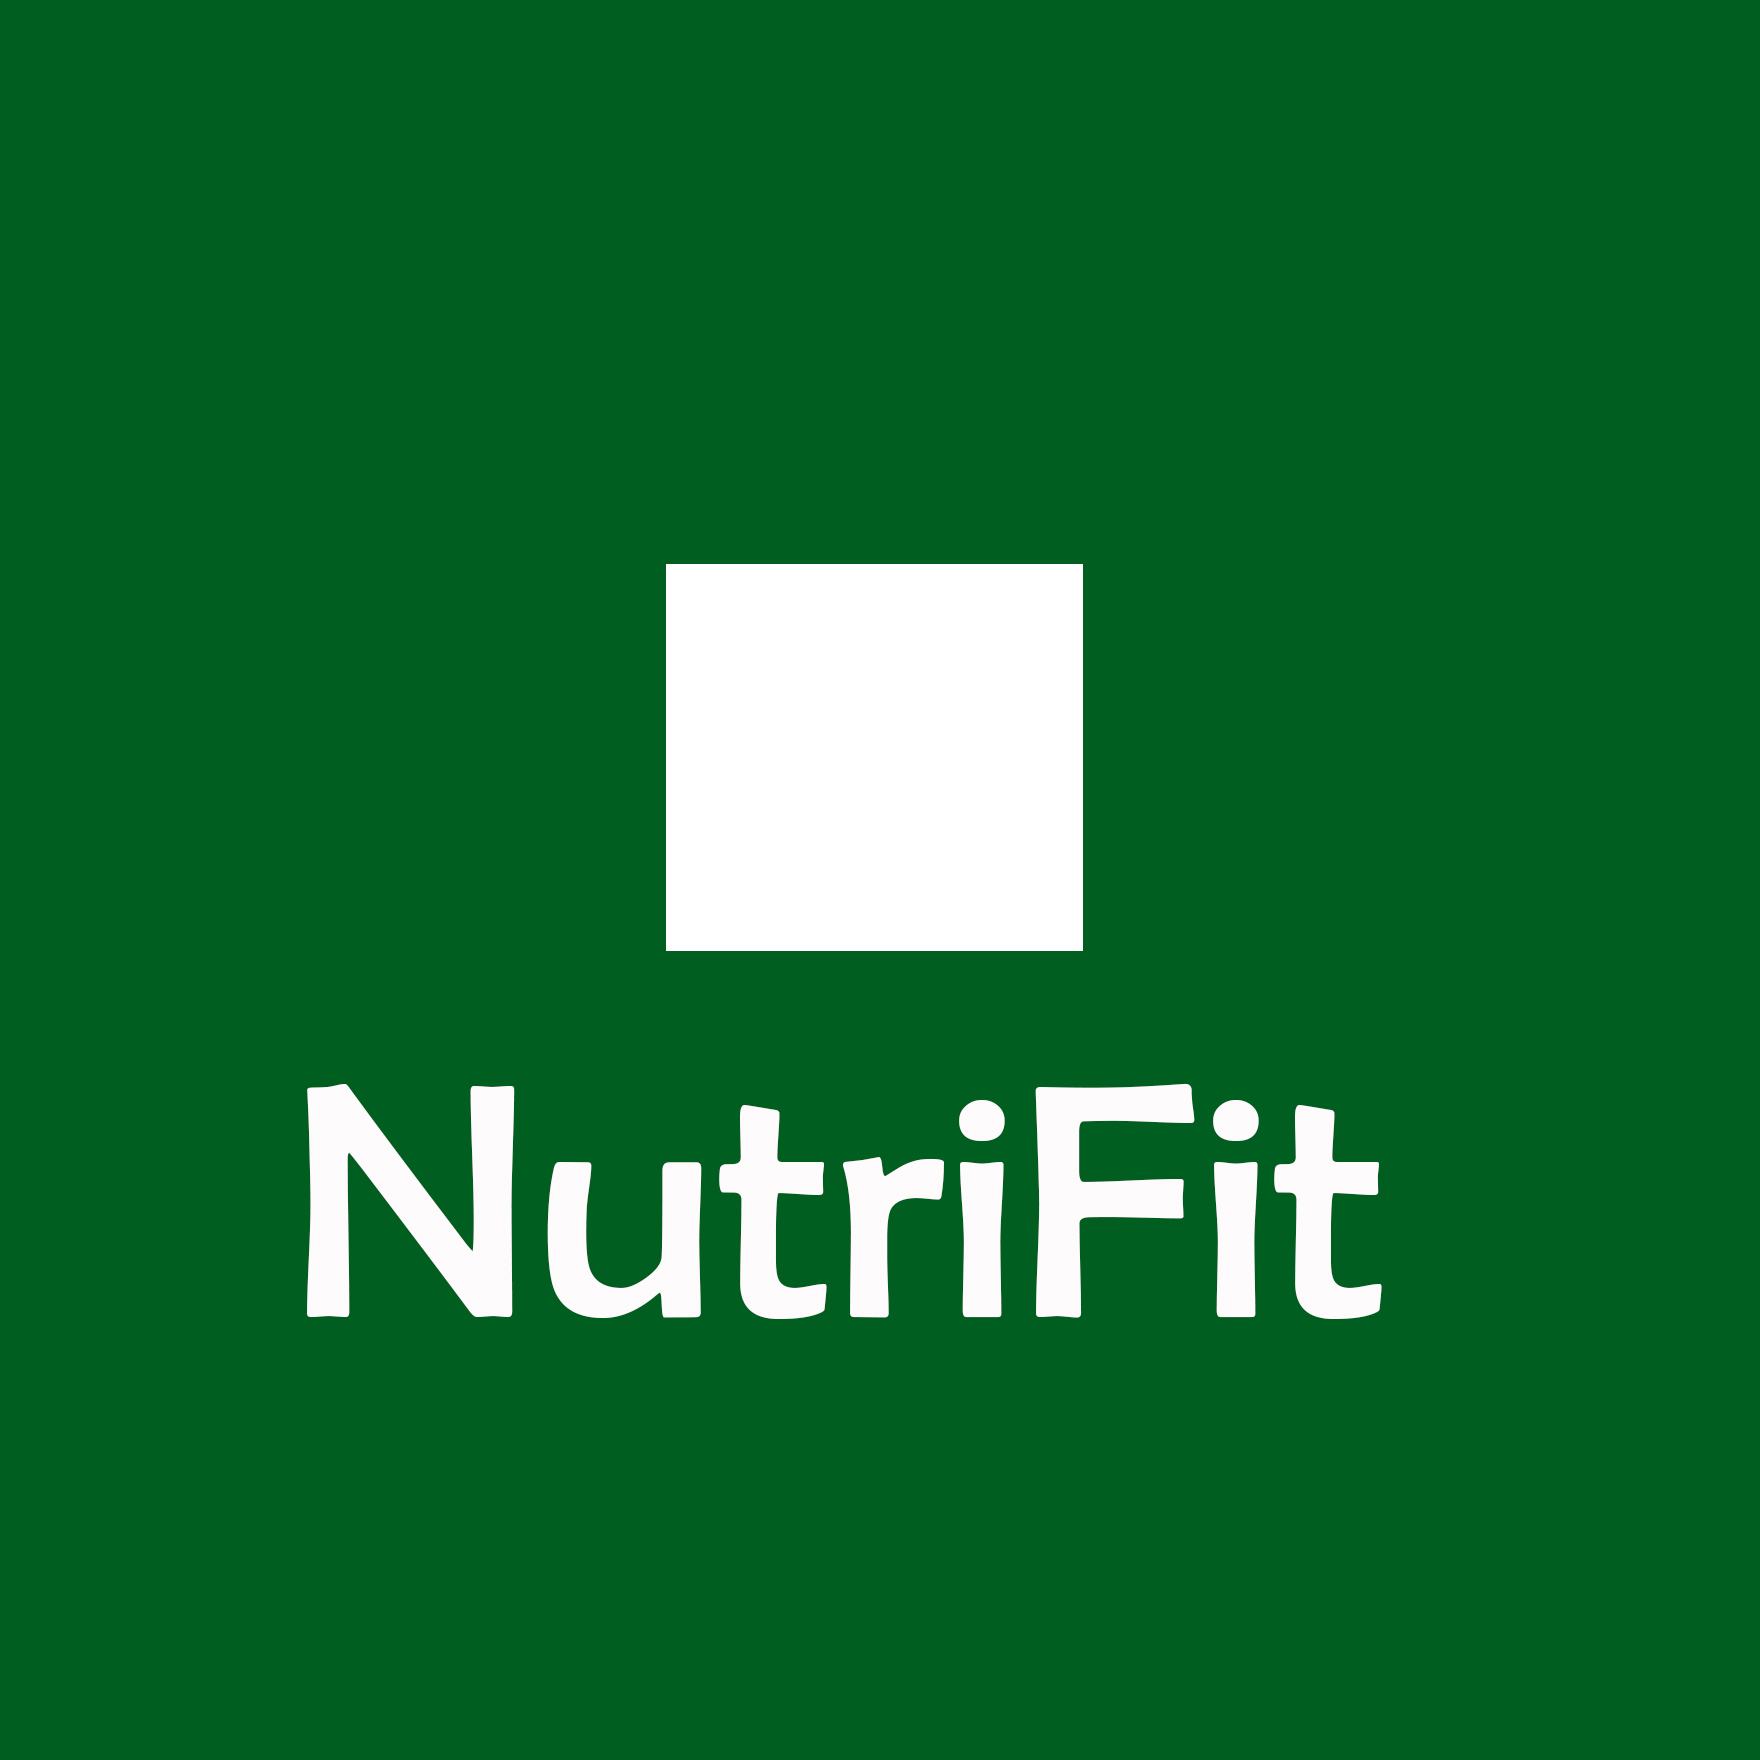 NutriFit Nigeria